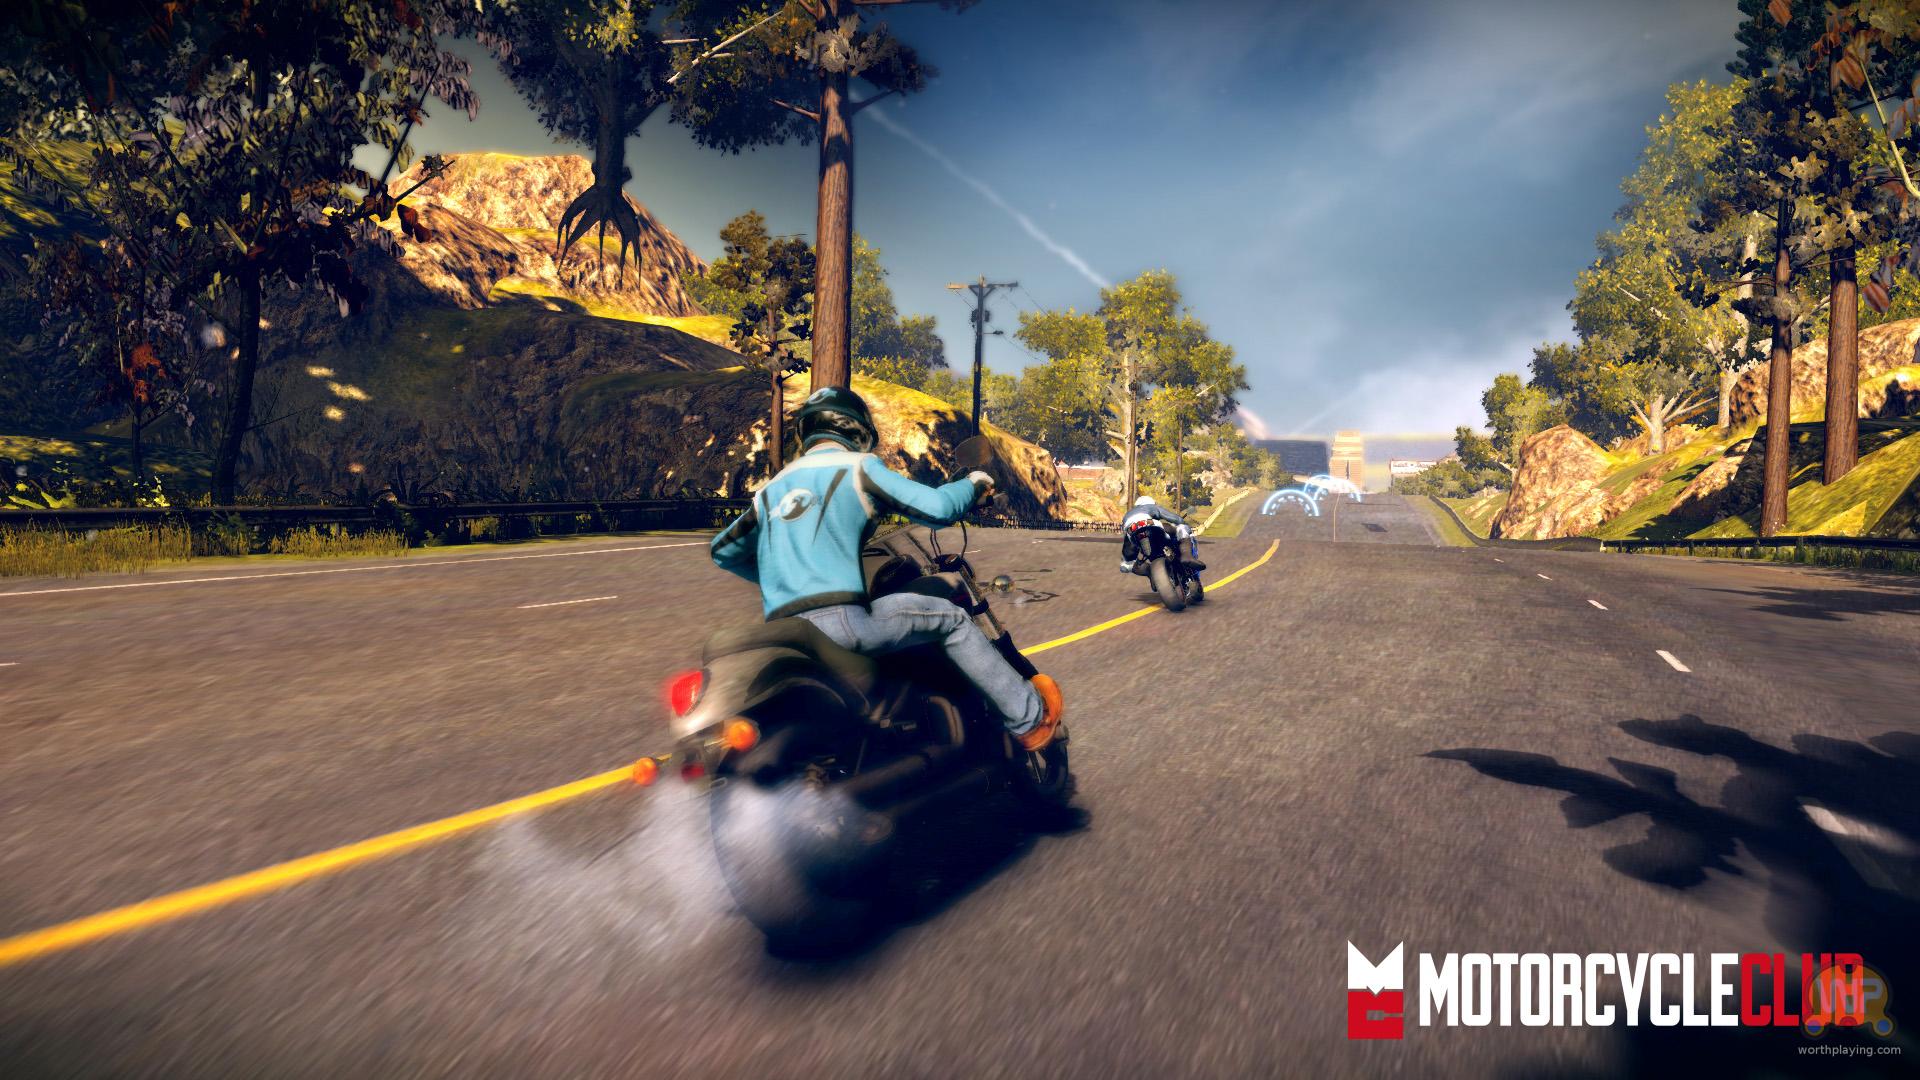 Мотоциклы открытый мир. Игра Motorcycle Club ps3. Motorcycle Club Xbox 360. Гонки на мотоциклах игры. Мотоциклы из игр.